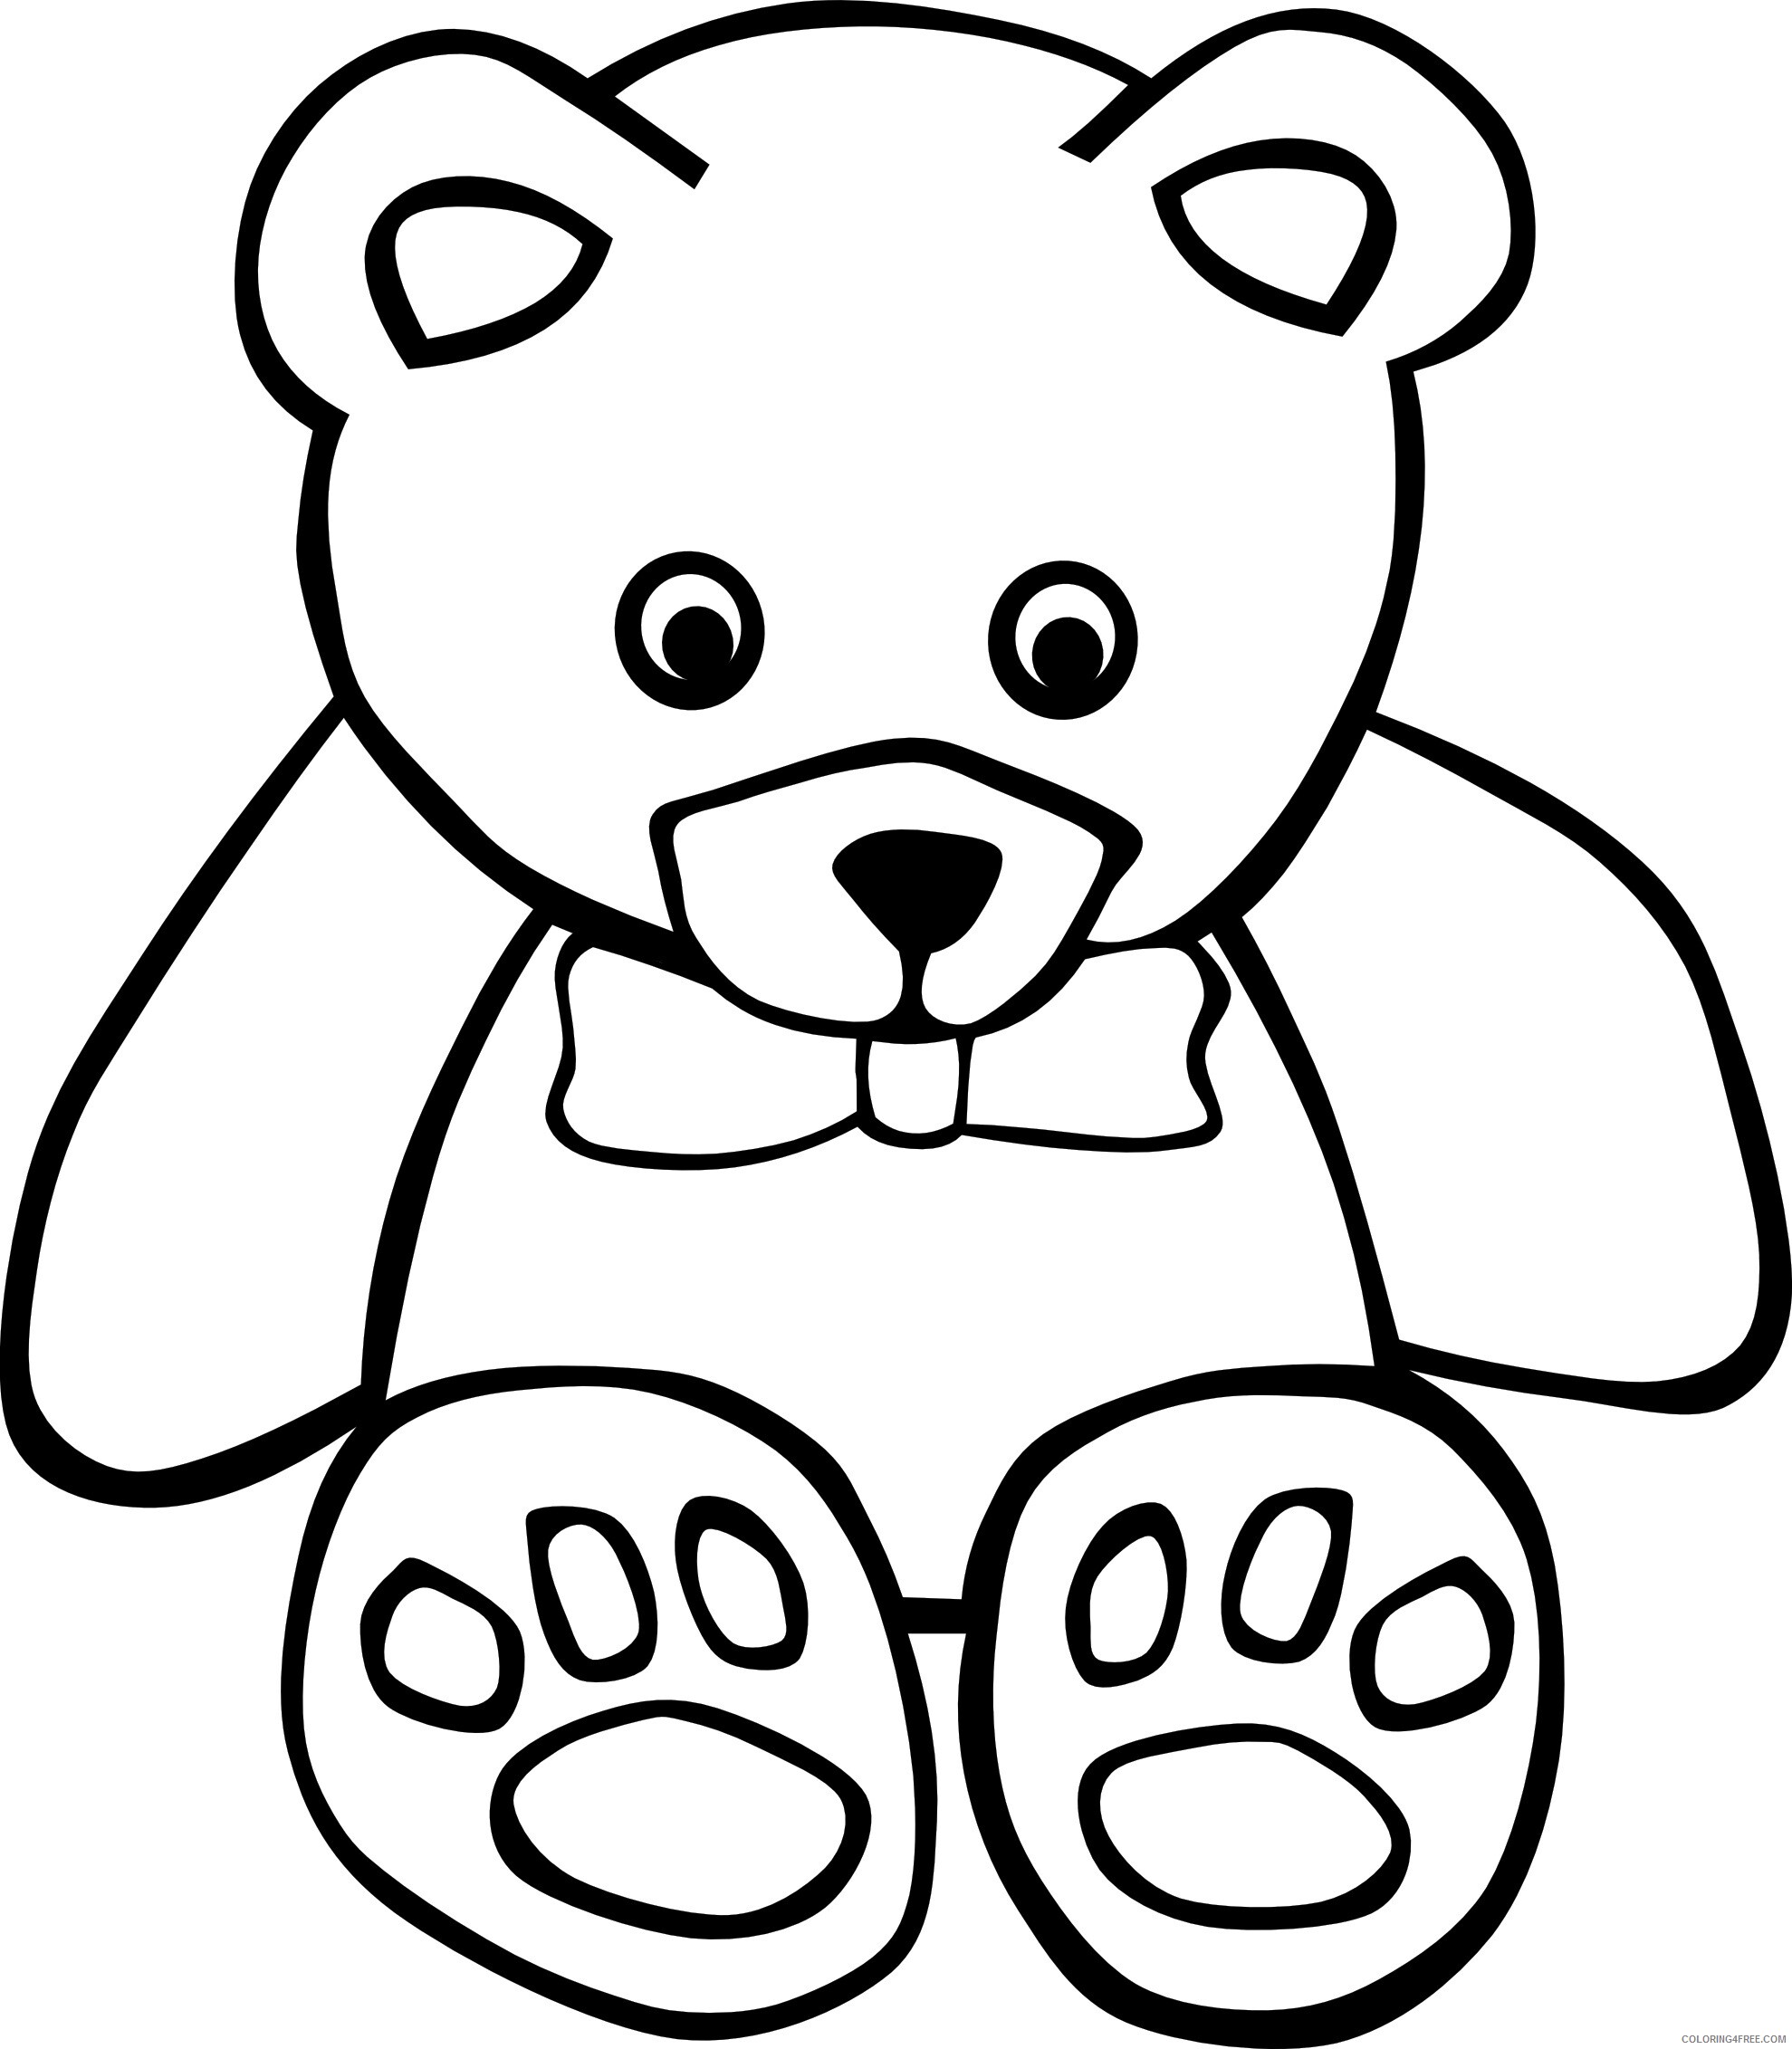 Bear Coloring Pages Animal Printable Sheets Teddy Bear Photos 2021 0319 Coloring4free